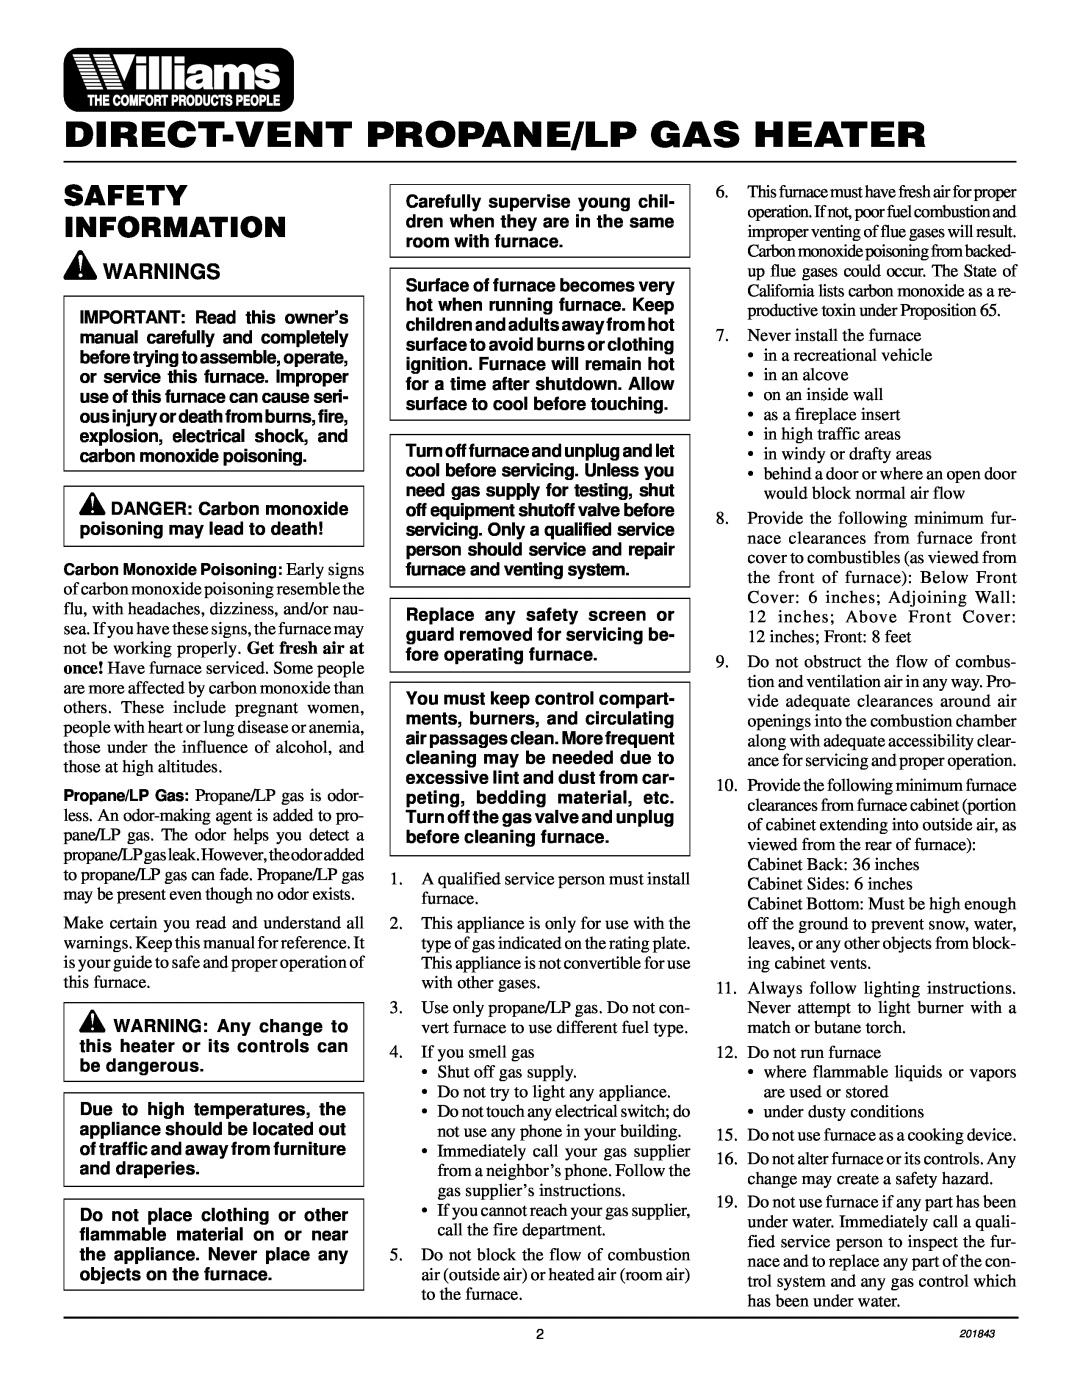 Williams 2503531, 4003531 installation manual Safety Information, Direct-Ventpropane/Lp Gas Heater, Warnings 